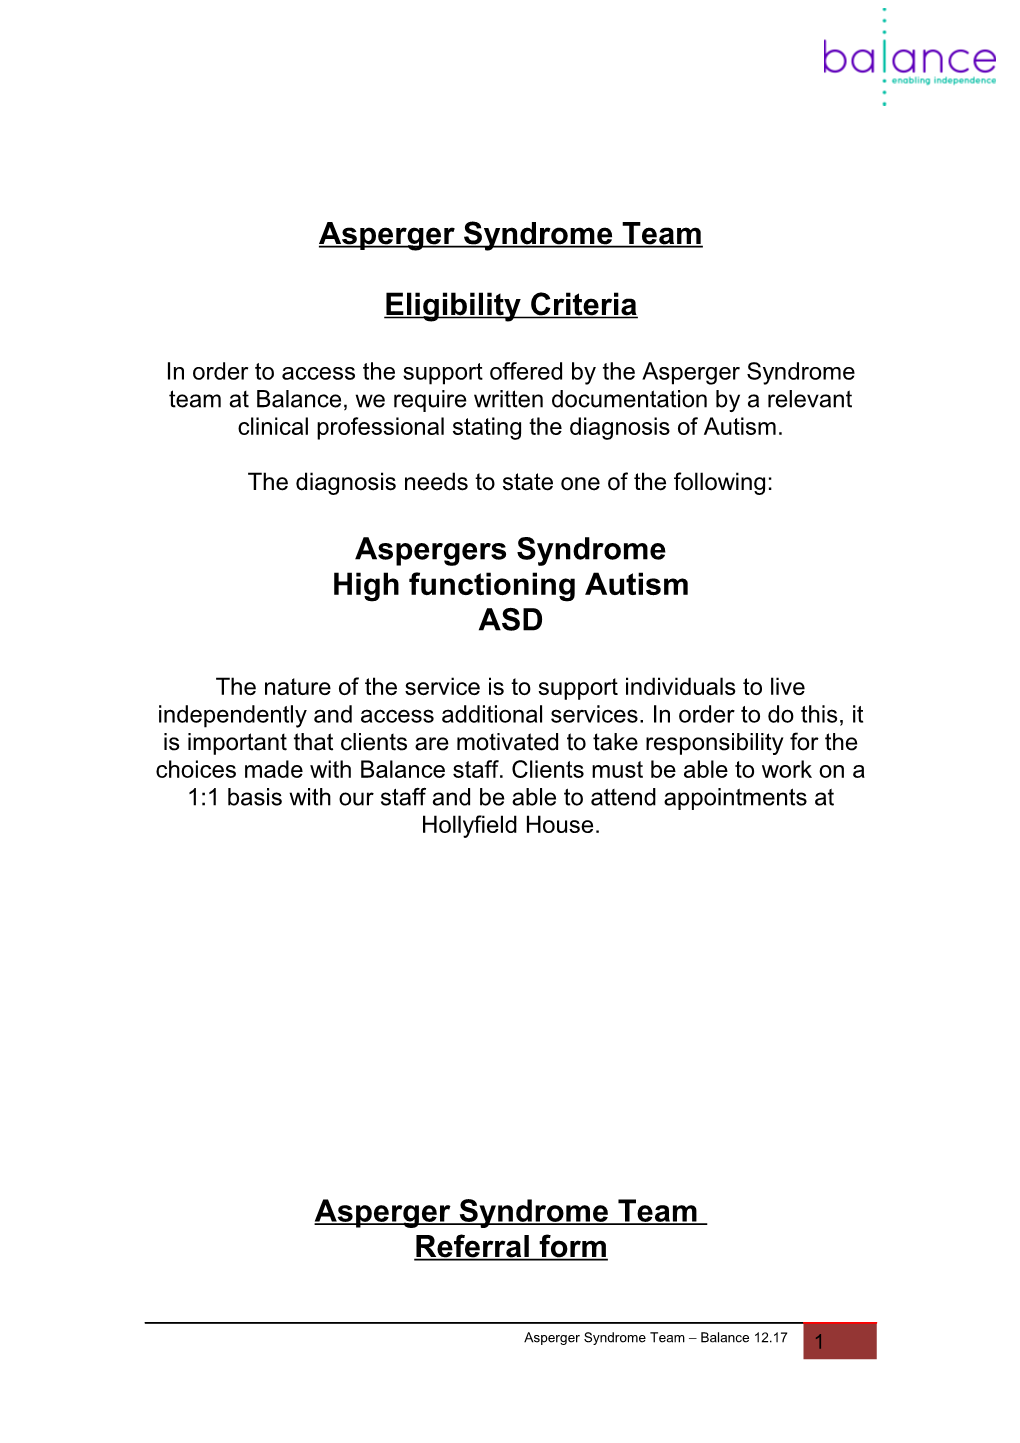 Royal Borough of Kingston S Asperger Syndrome Service